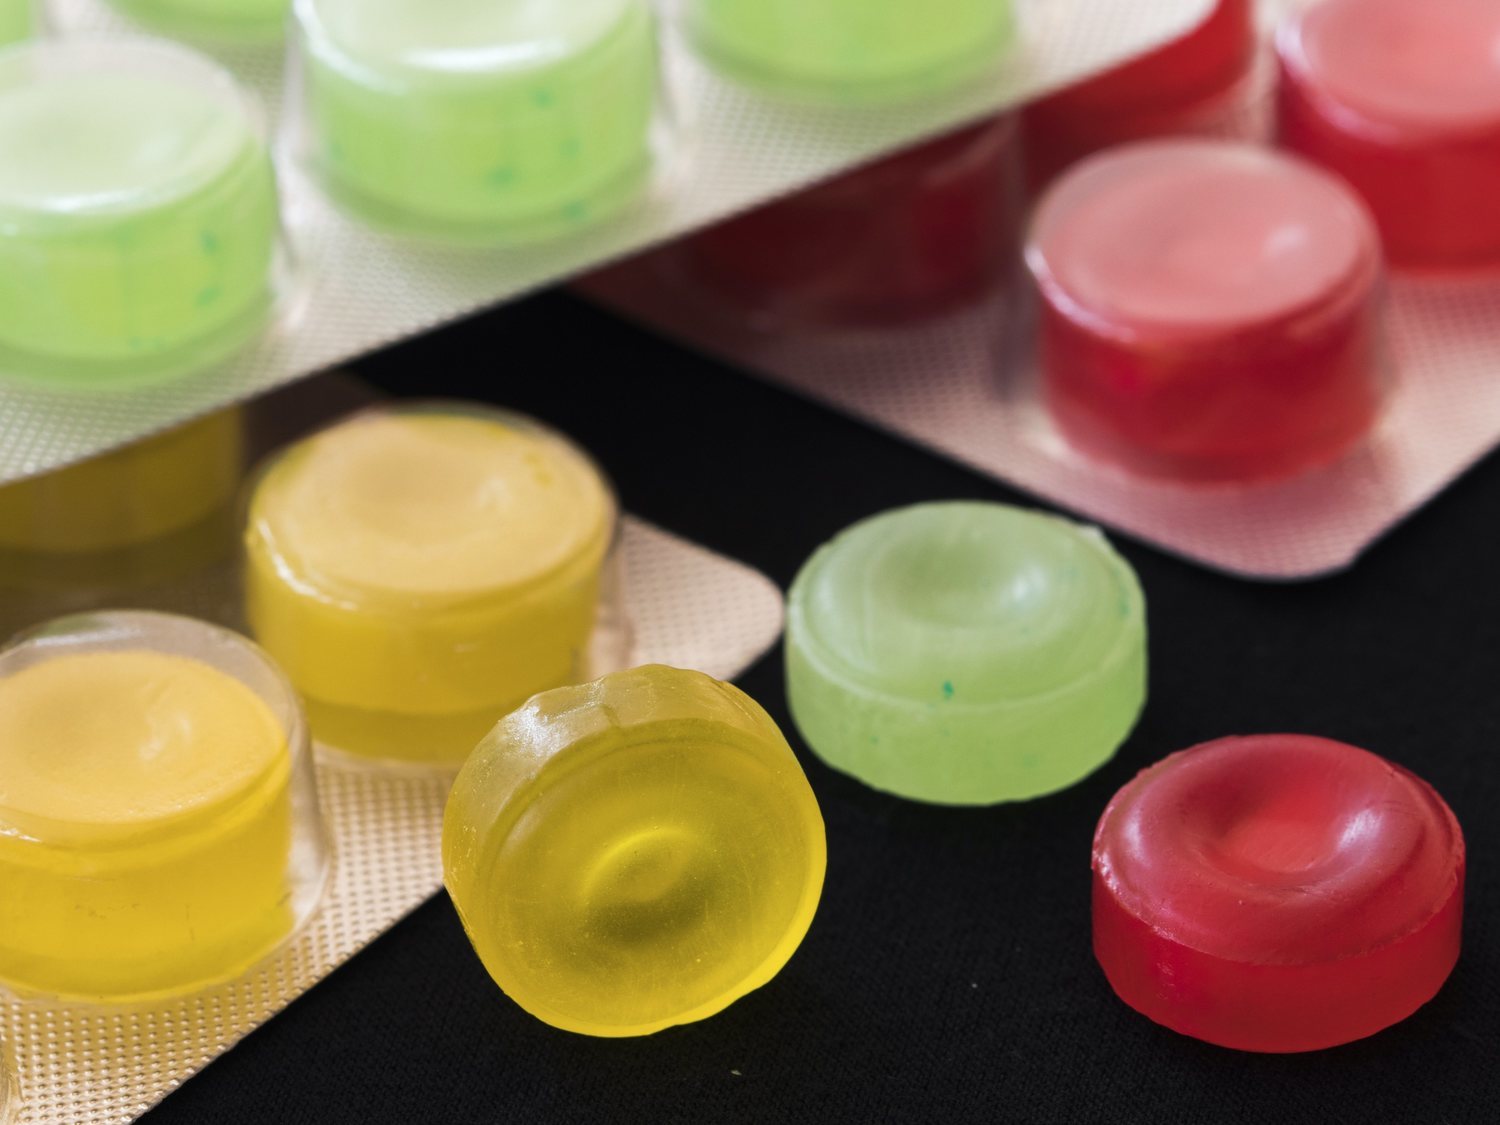 Alerta sanitaria: retiran estas pastillas infantiles de todas las tiendas por riesgo